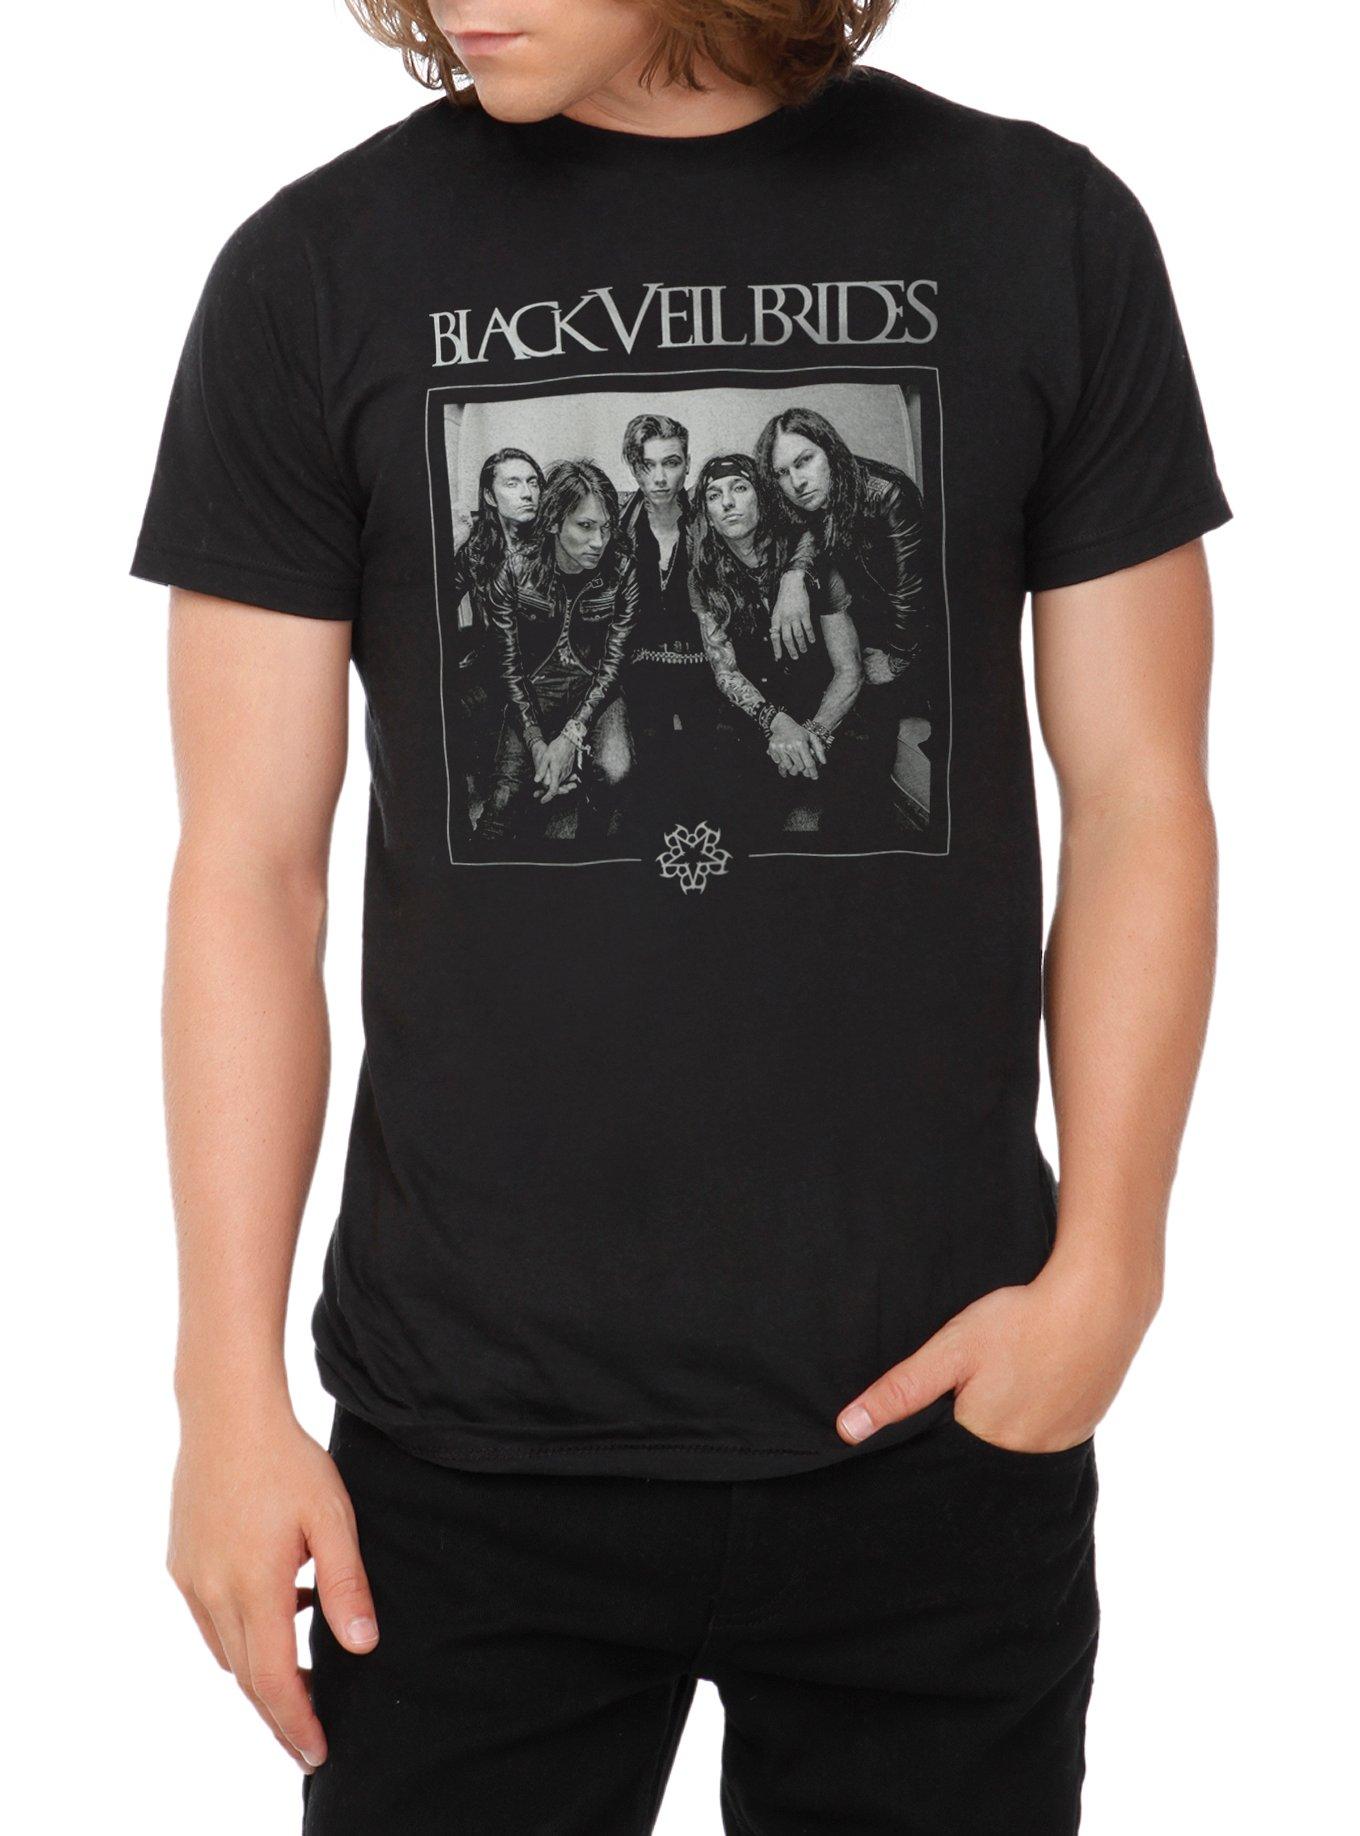 Black Veil Brides B&W Photo T-Shirt | Hot Topic